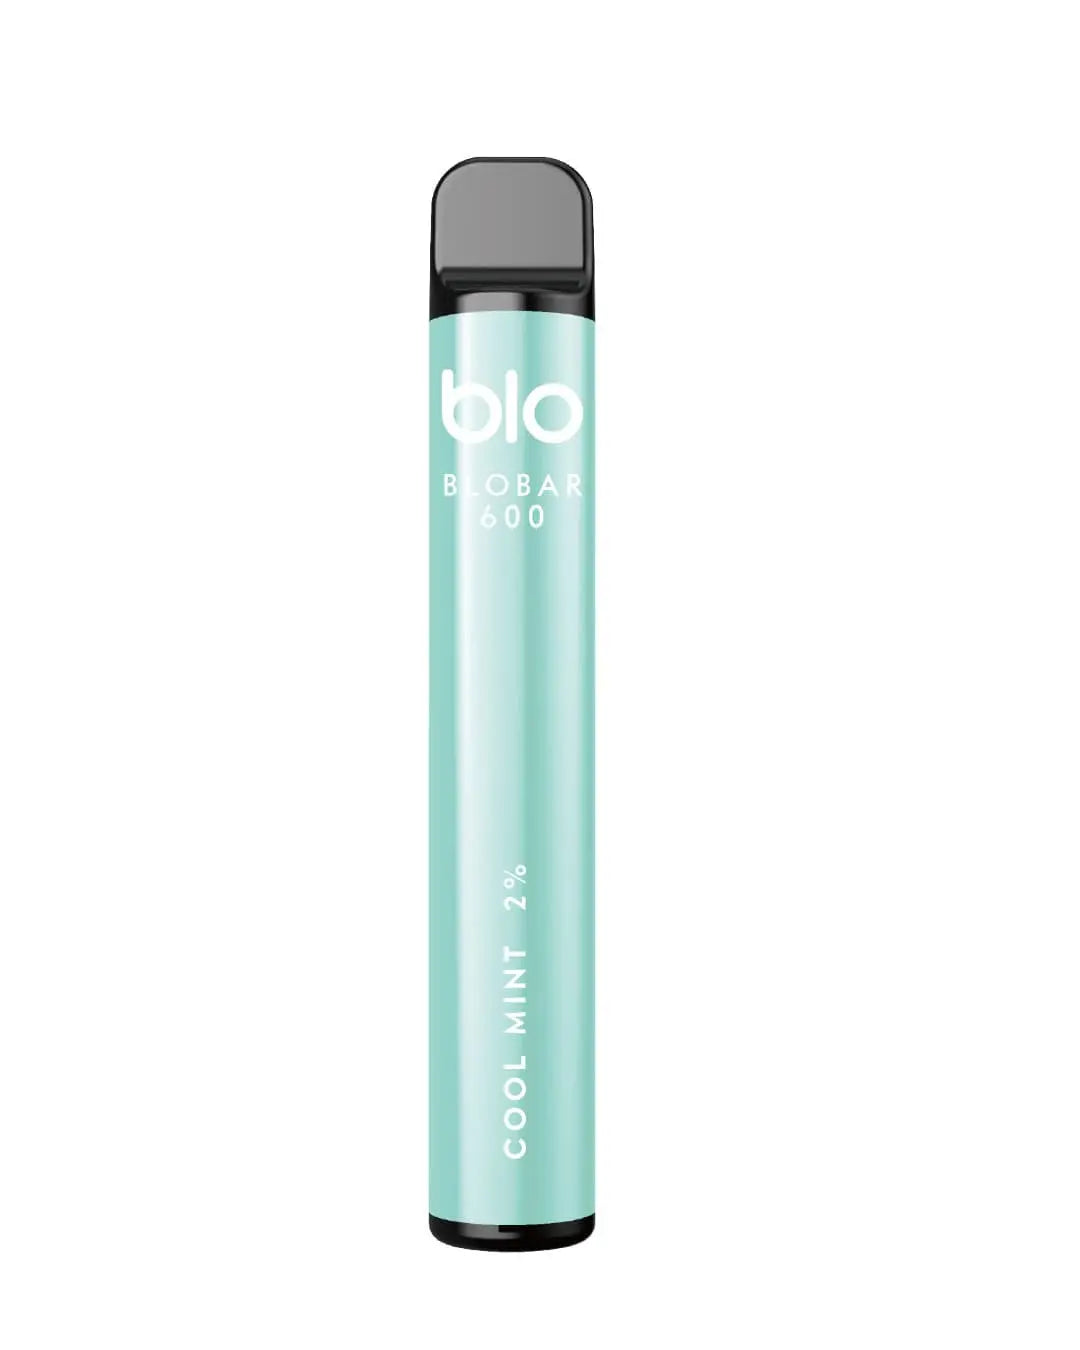 Blo Bar 600 - Cool Mint Disposable Vapes